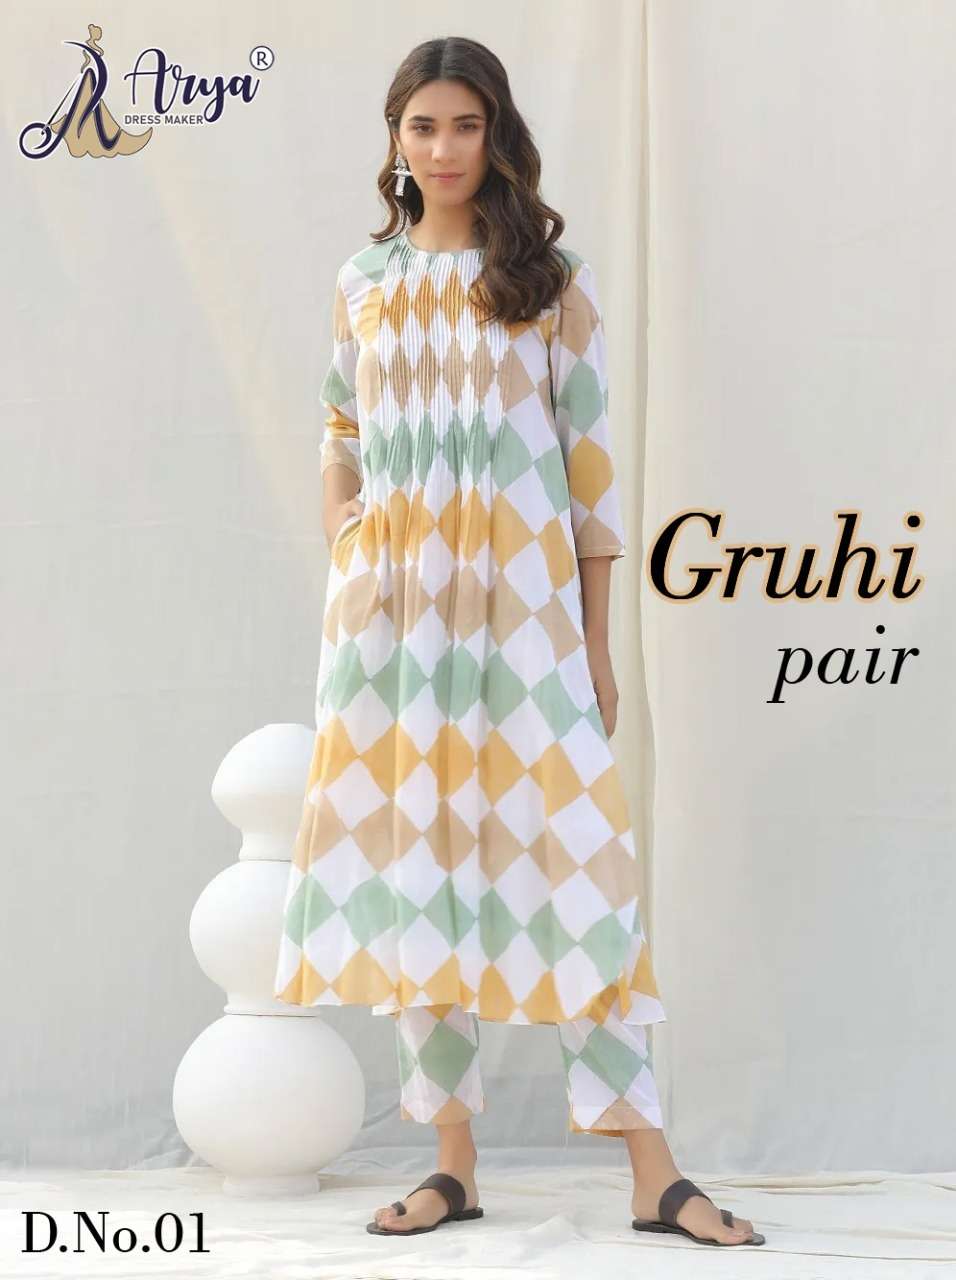 Gruhi Pair Arya Dress Maker Asliwholesale 01 0 2022 07 04 13 51 34